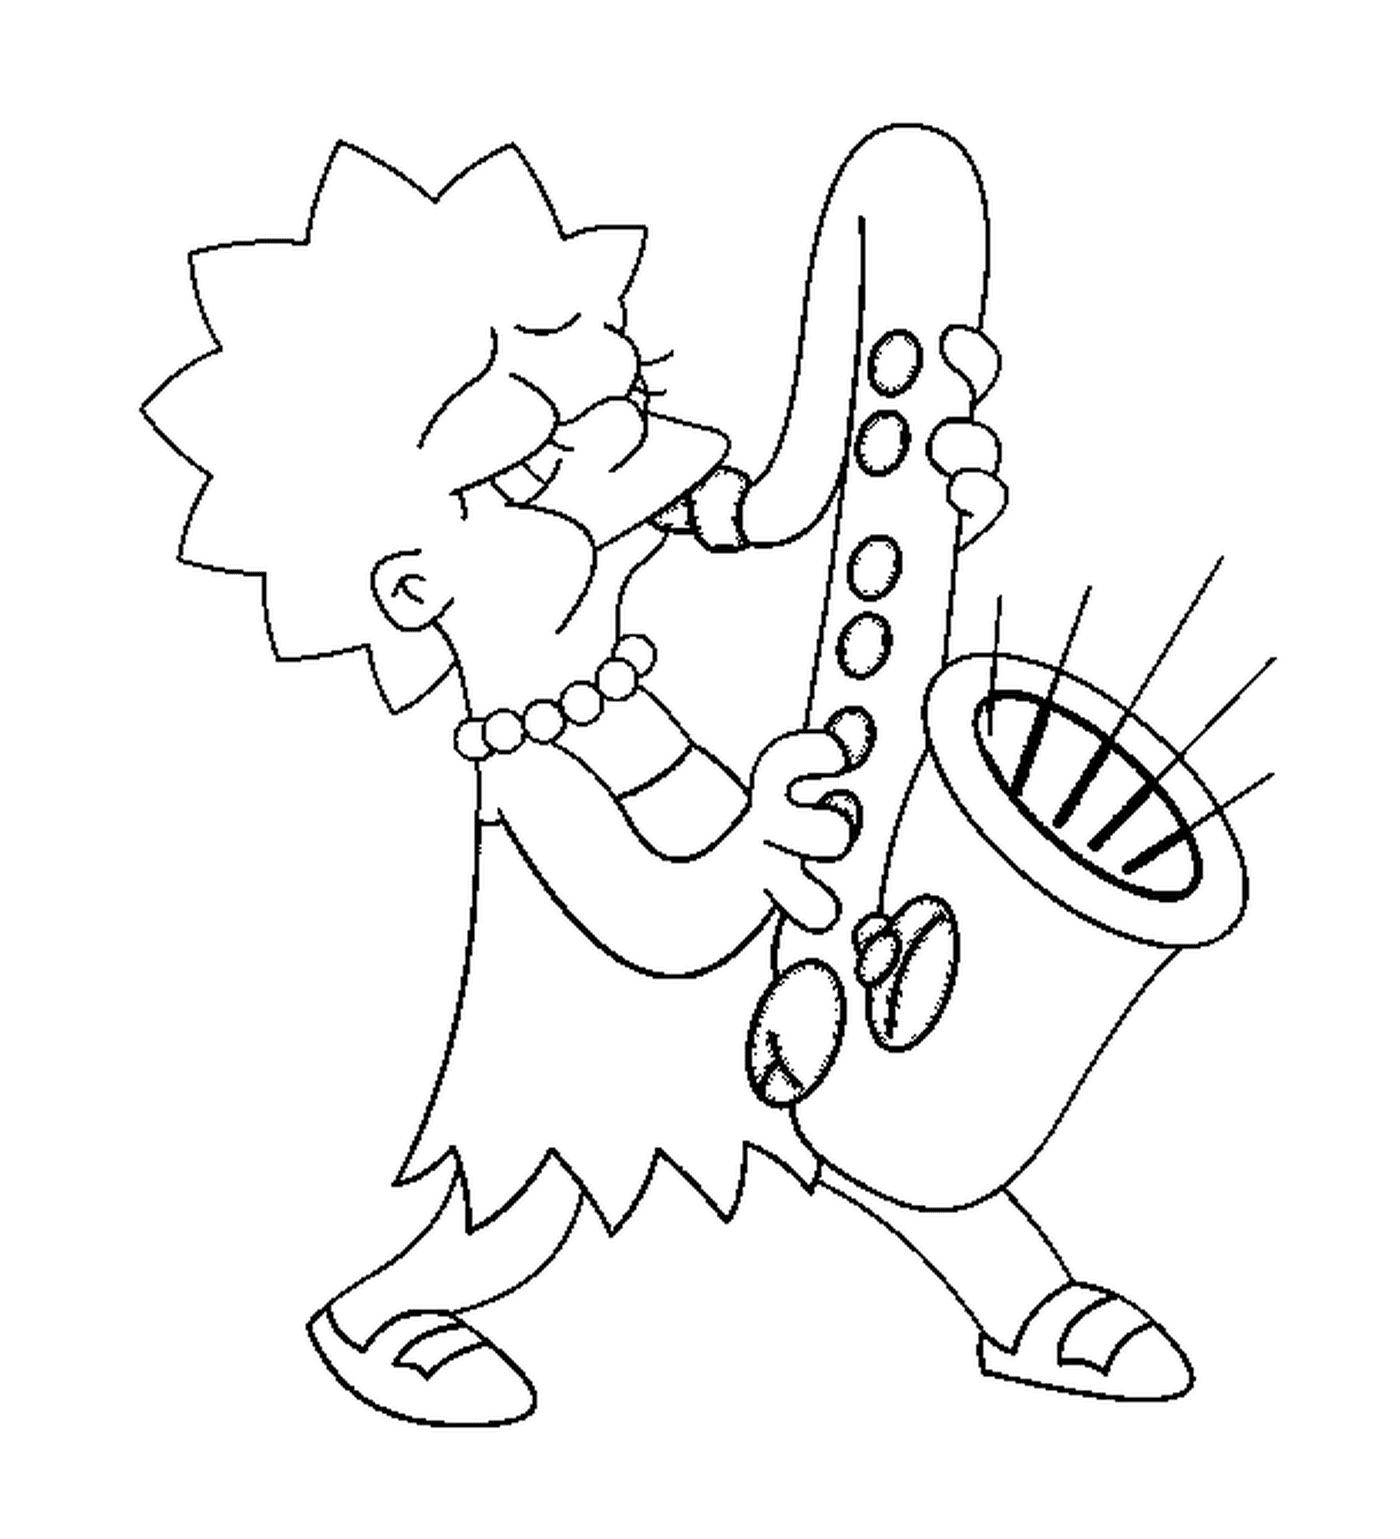  Lisa plays the harmonious saxophone 